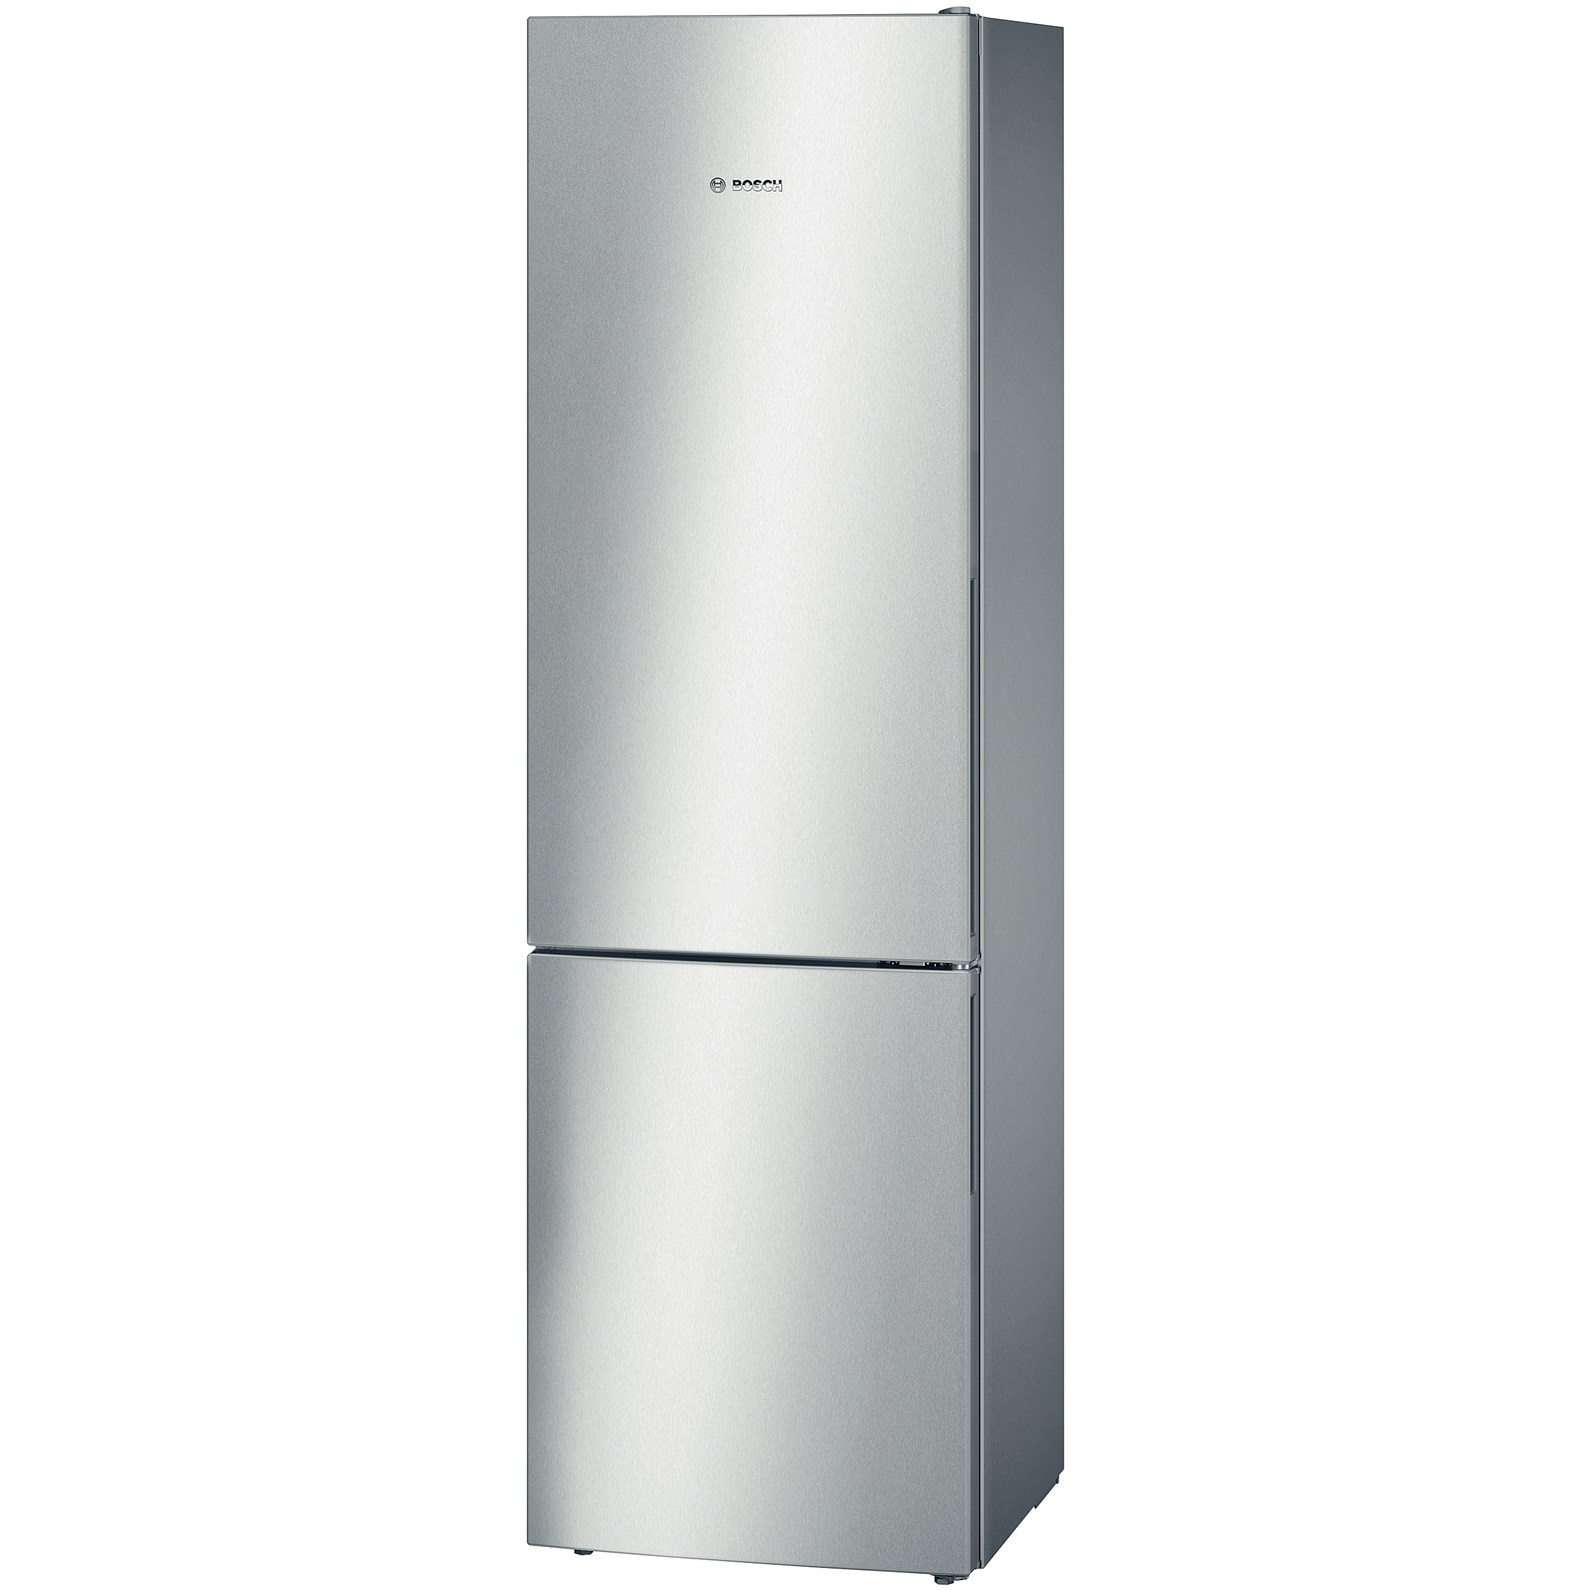  Combina frigorifica Bosch KGN39VL21, 354 l, Clasa A+ 